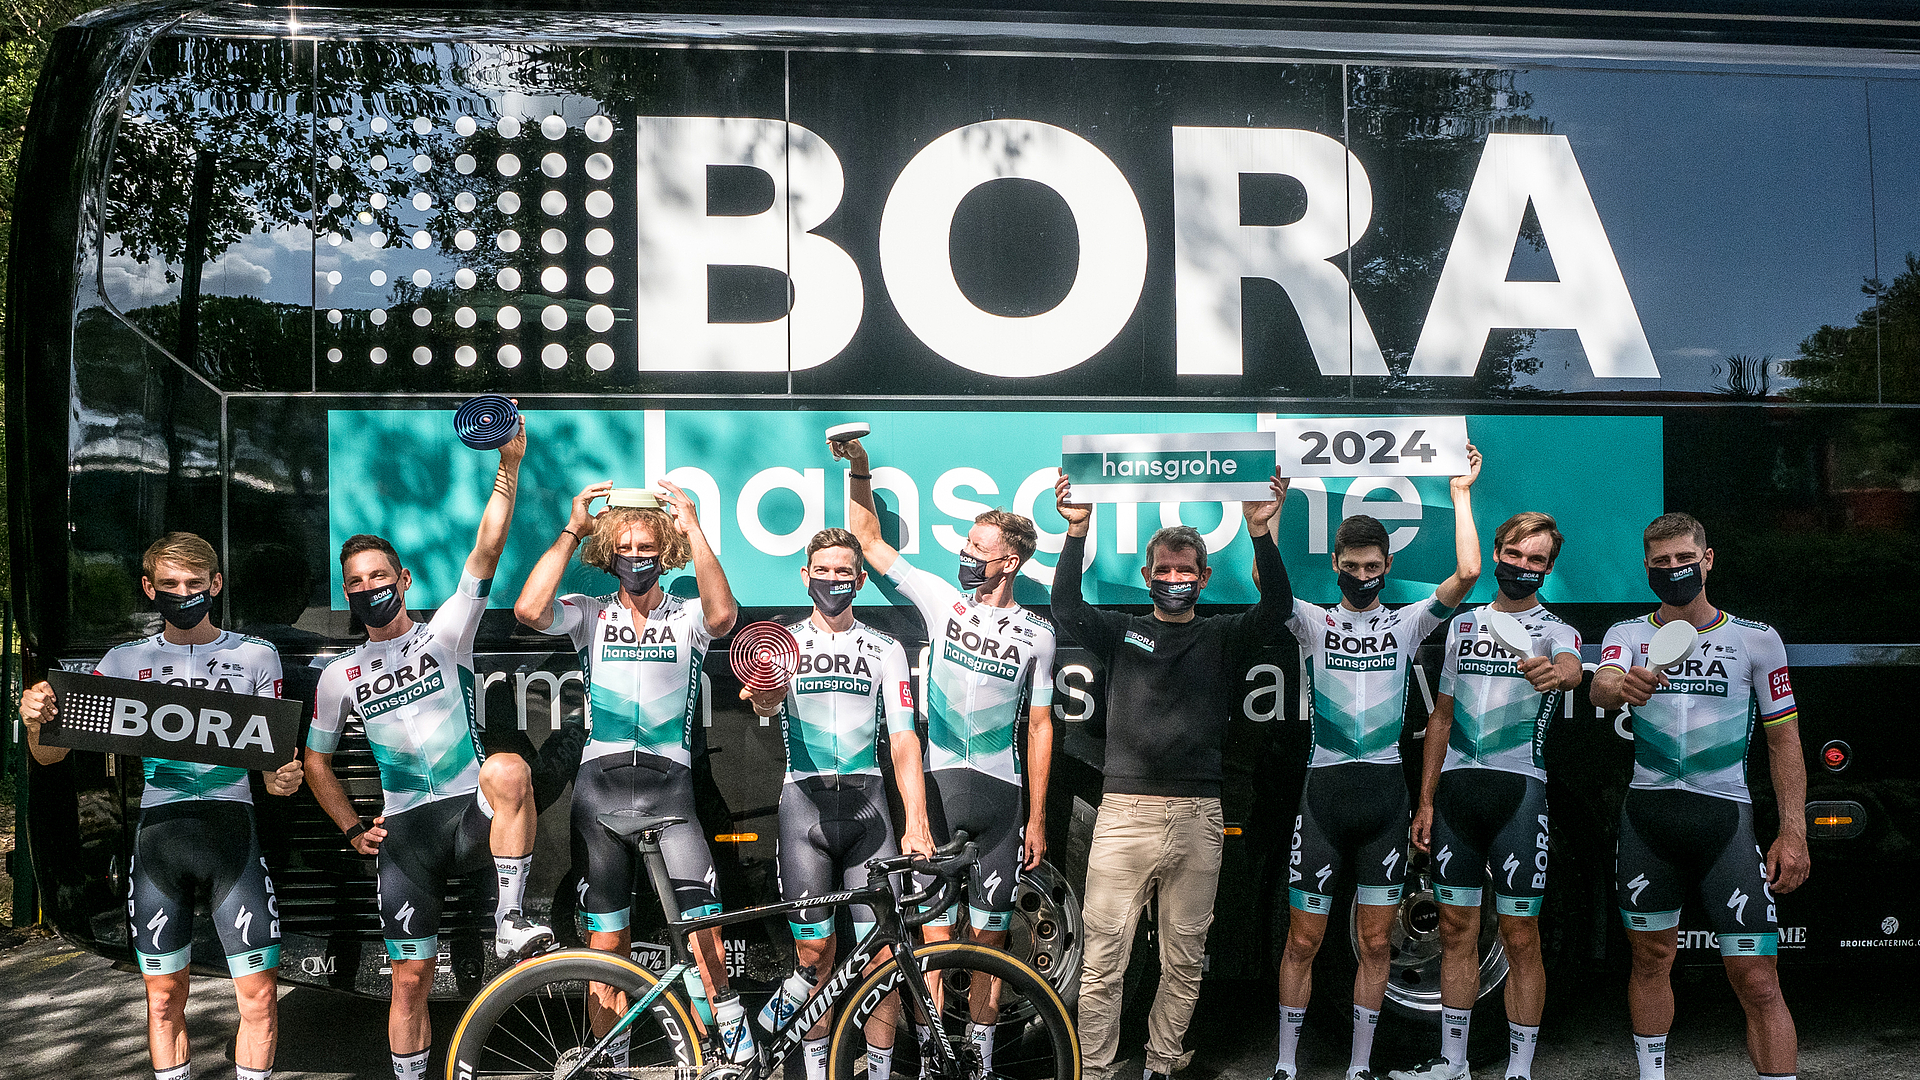 BORA extends main sponsorship of the BORA – hansgrohe cycling team through to 2024